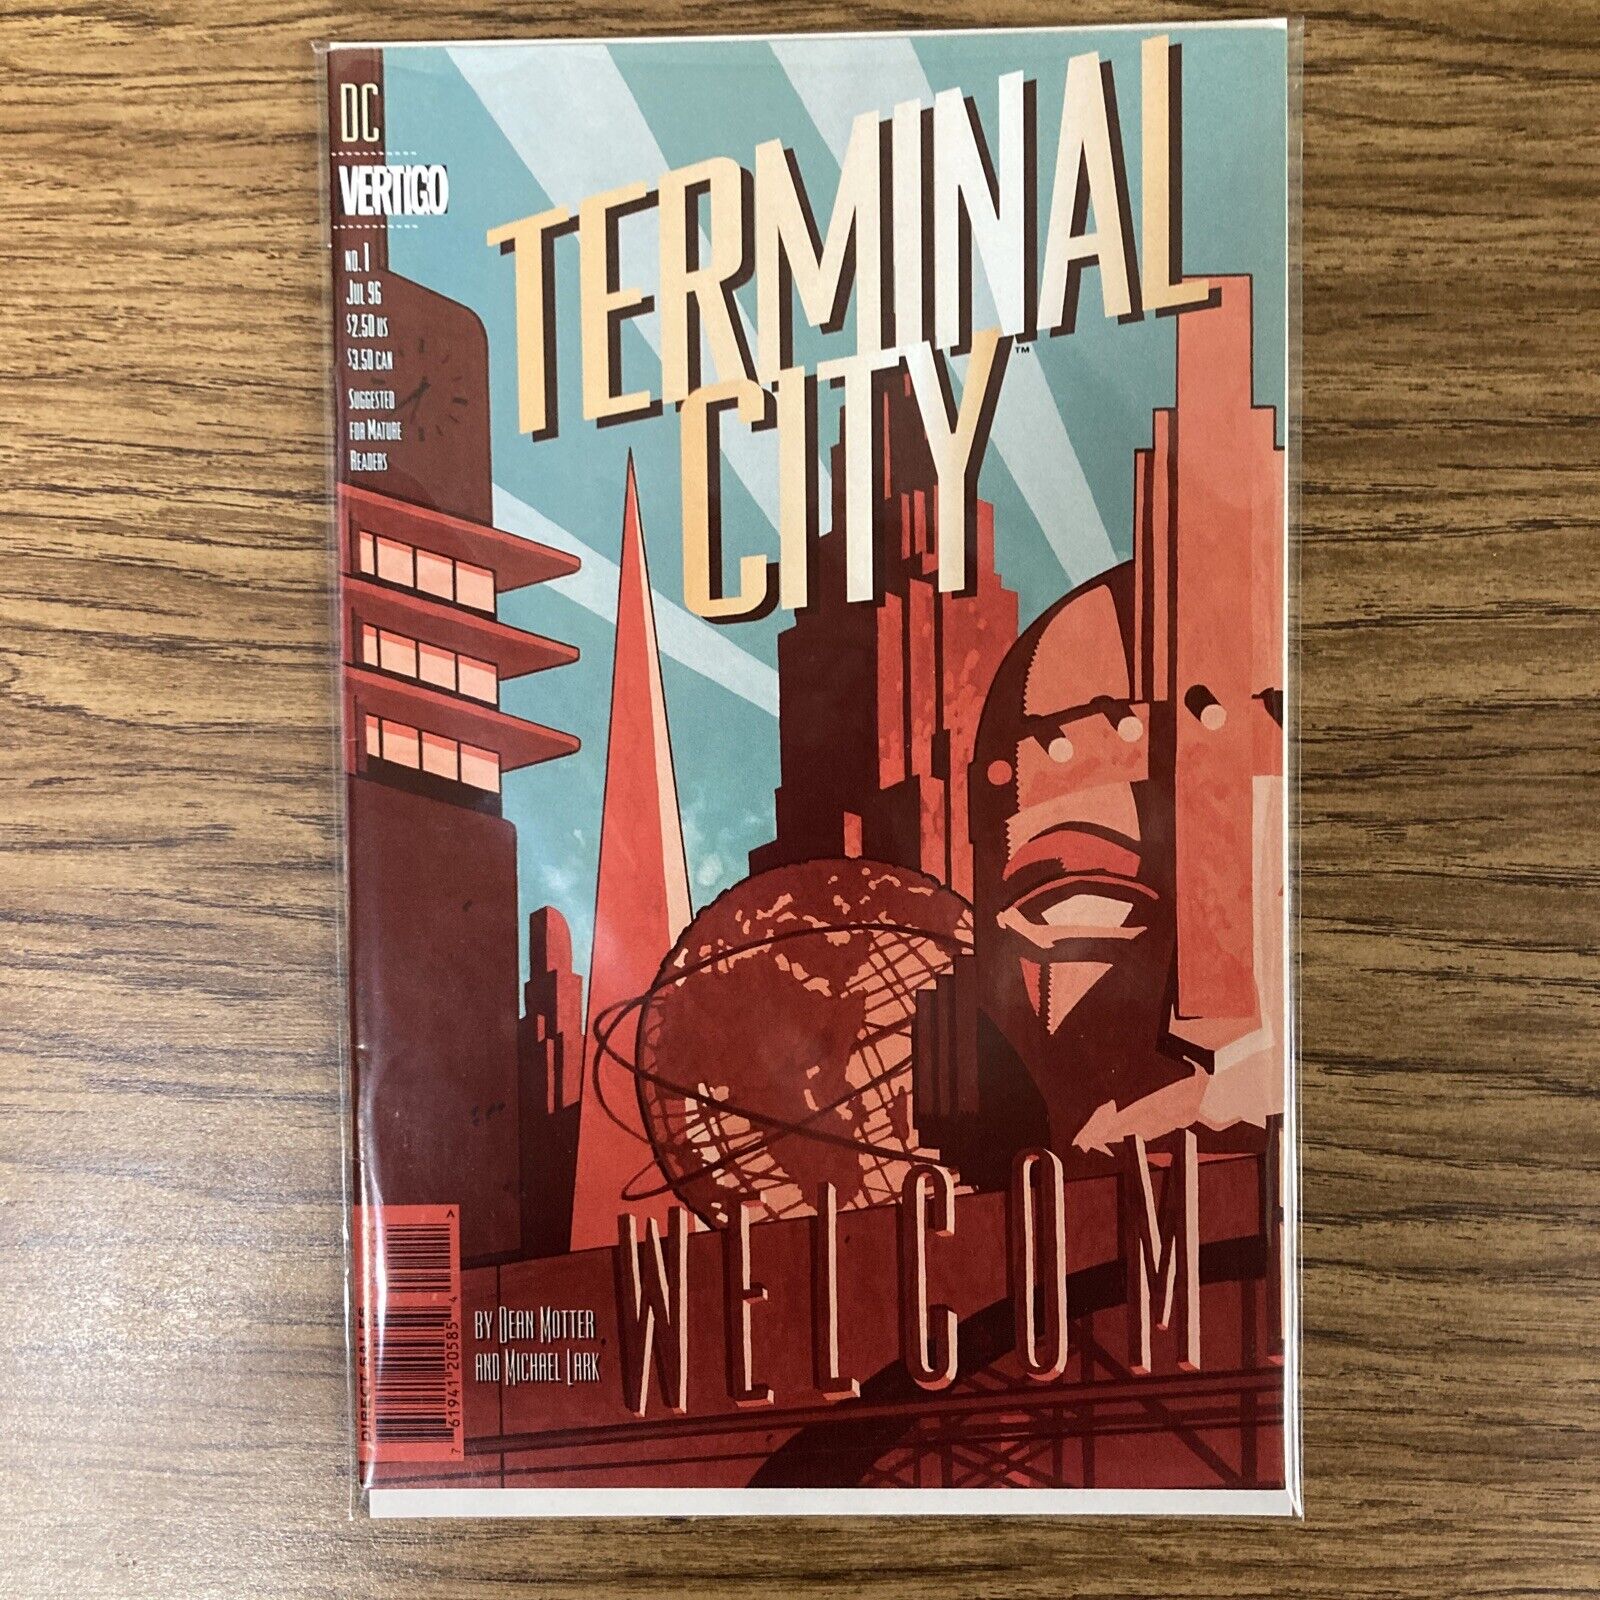 TERMINAL CITY #1 DC Vertigo Comic. Higher Grade Unread Copy. Combined Shipping